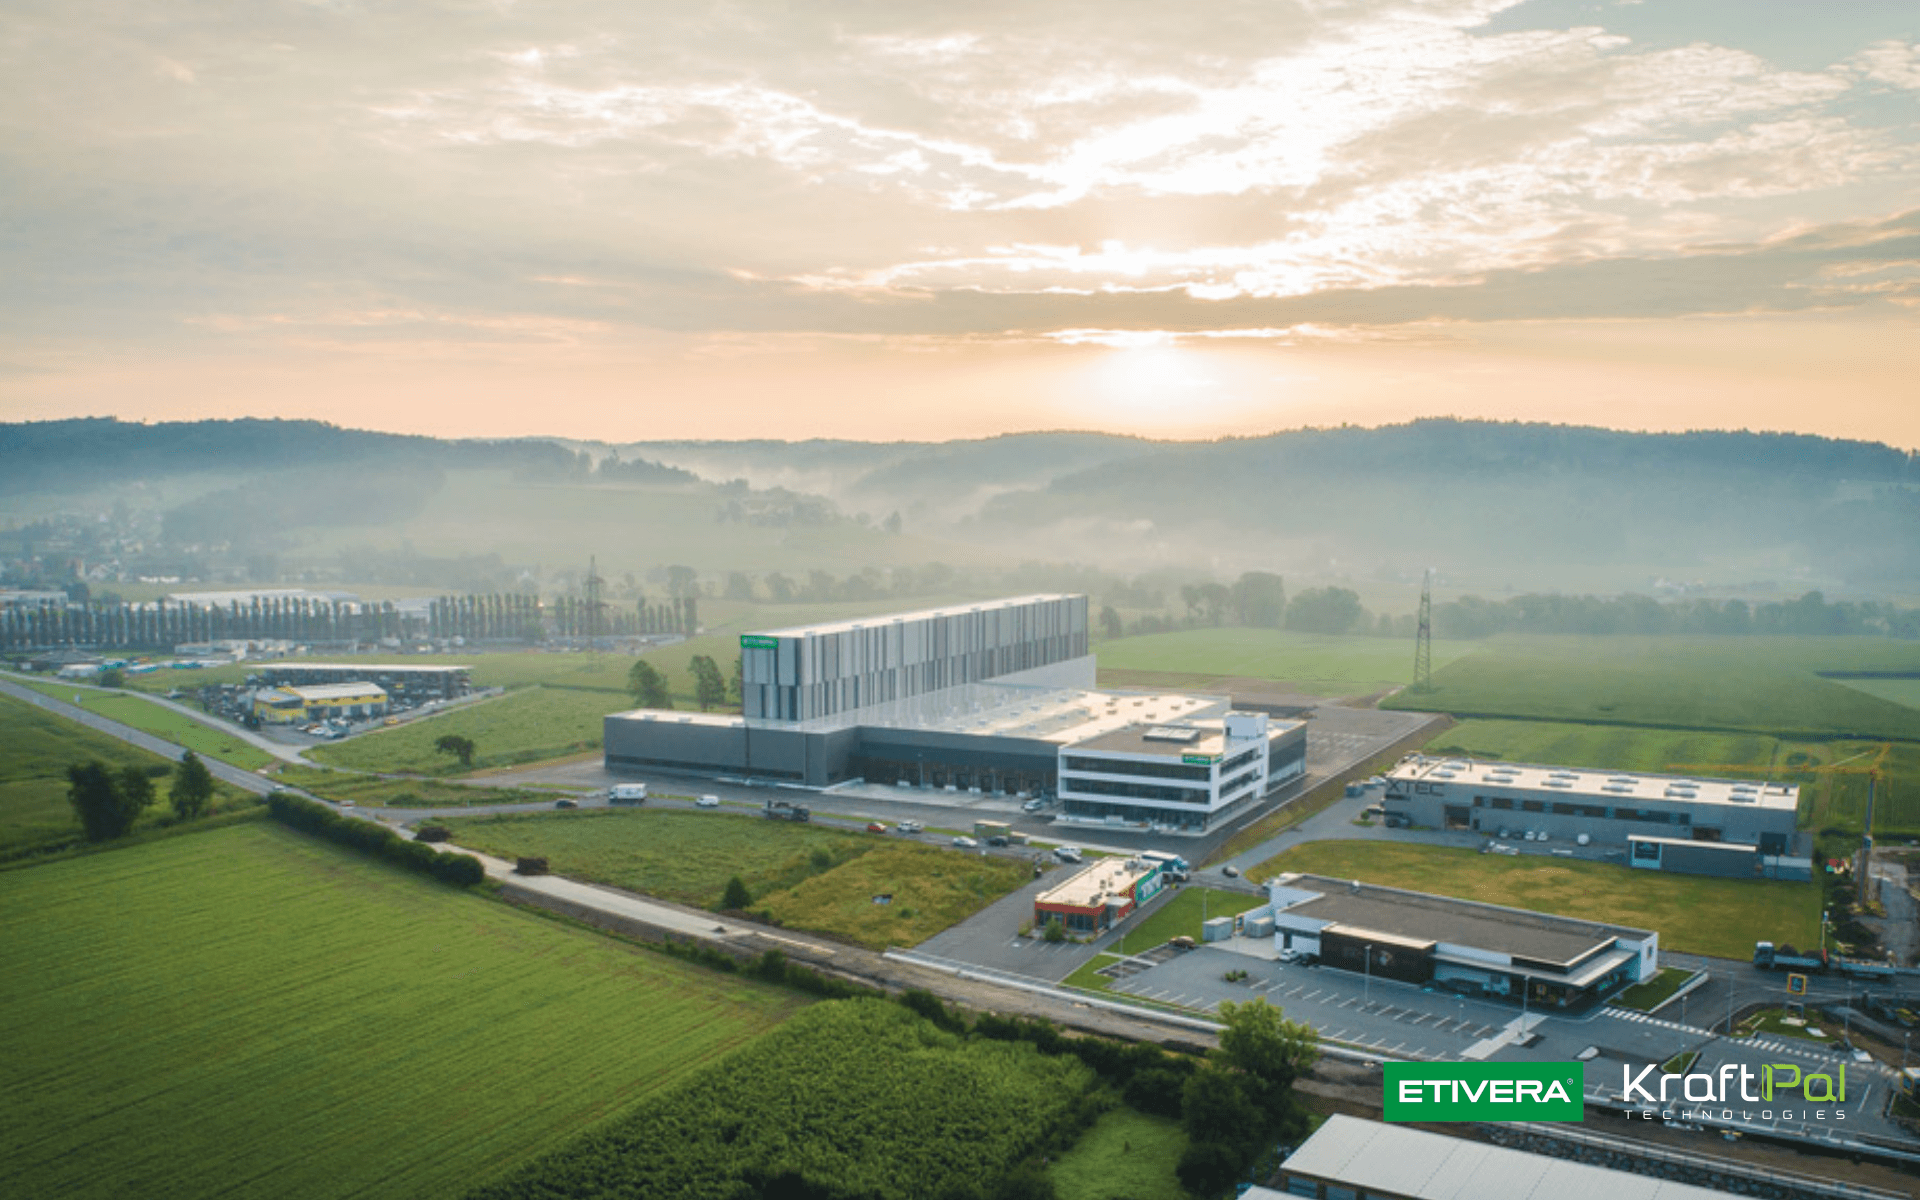 Client Showcase: Etivera GmbH